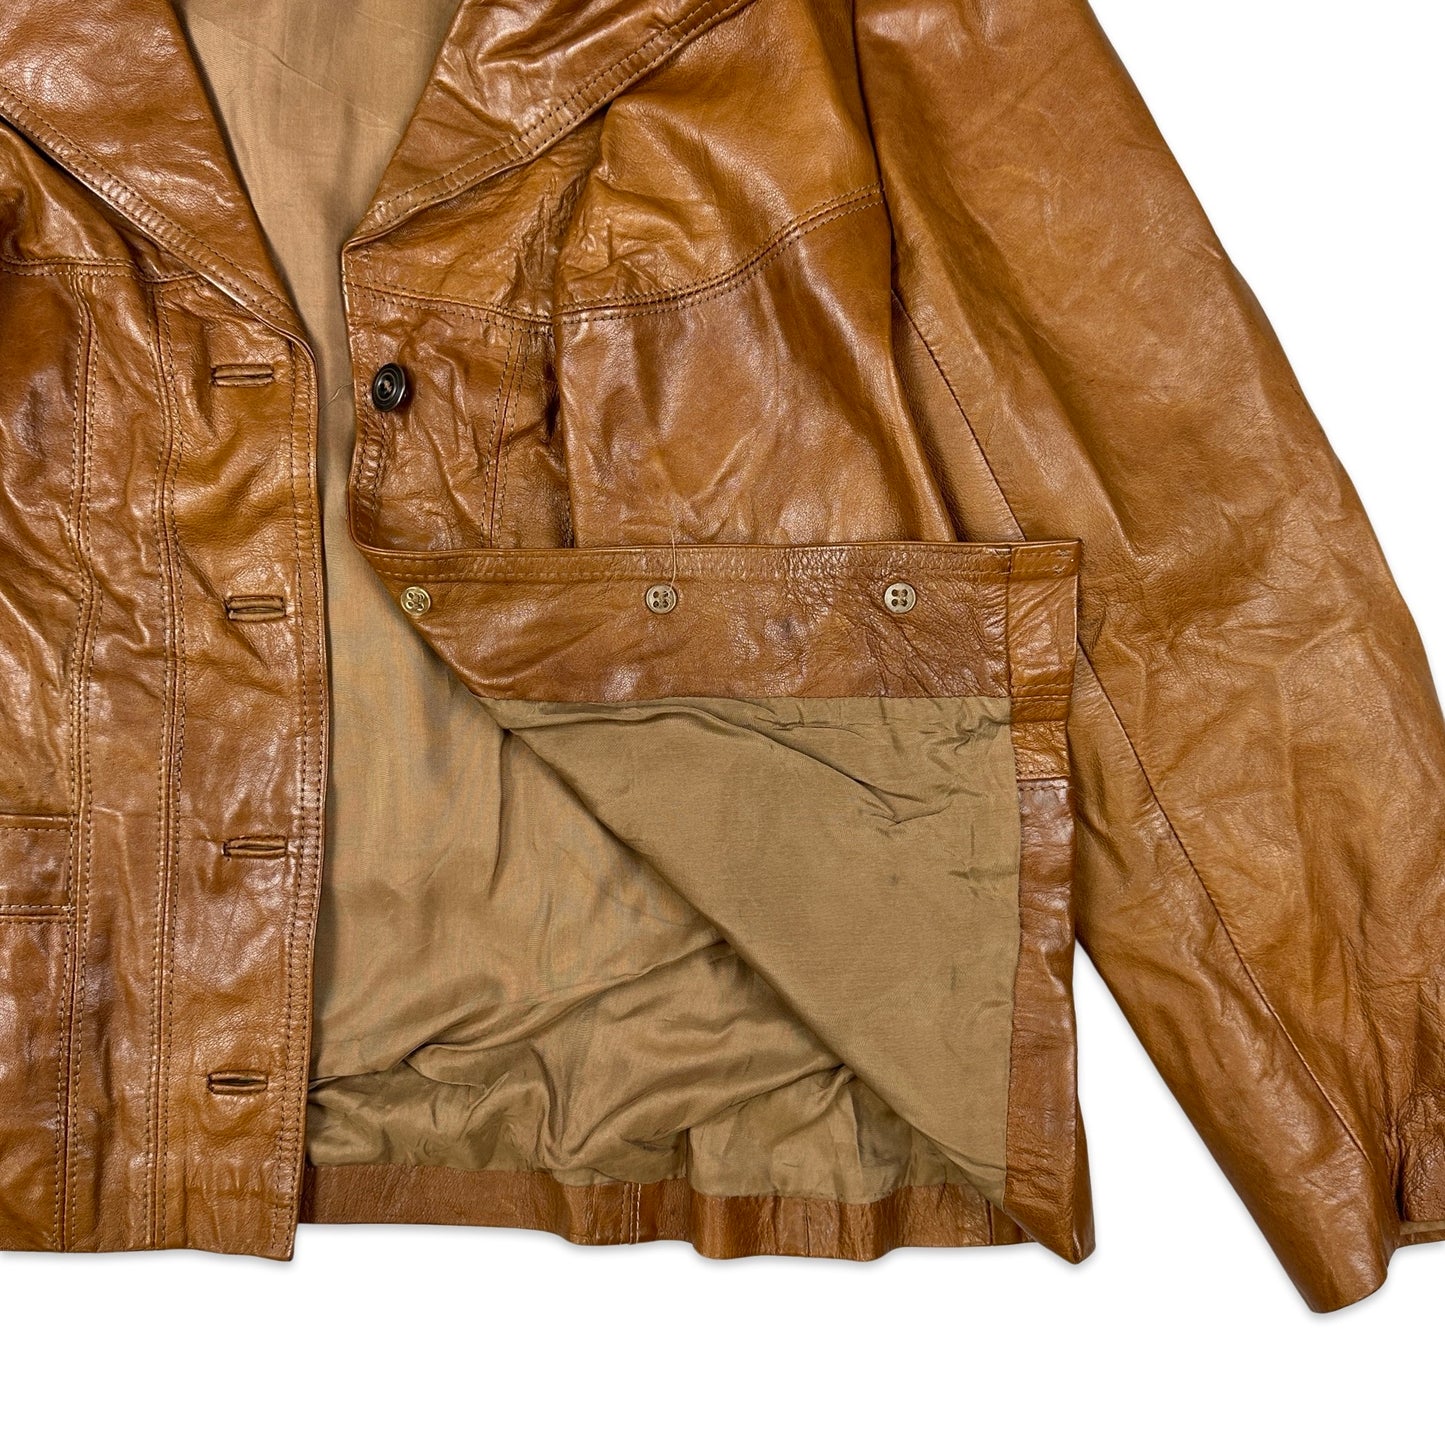 90s Vintage Tan Leather Jacket 20